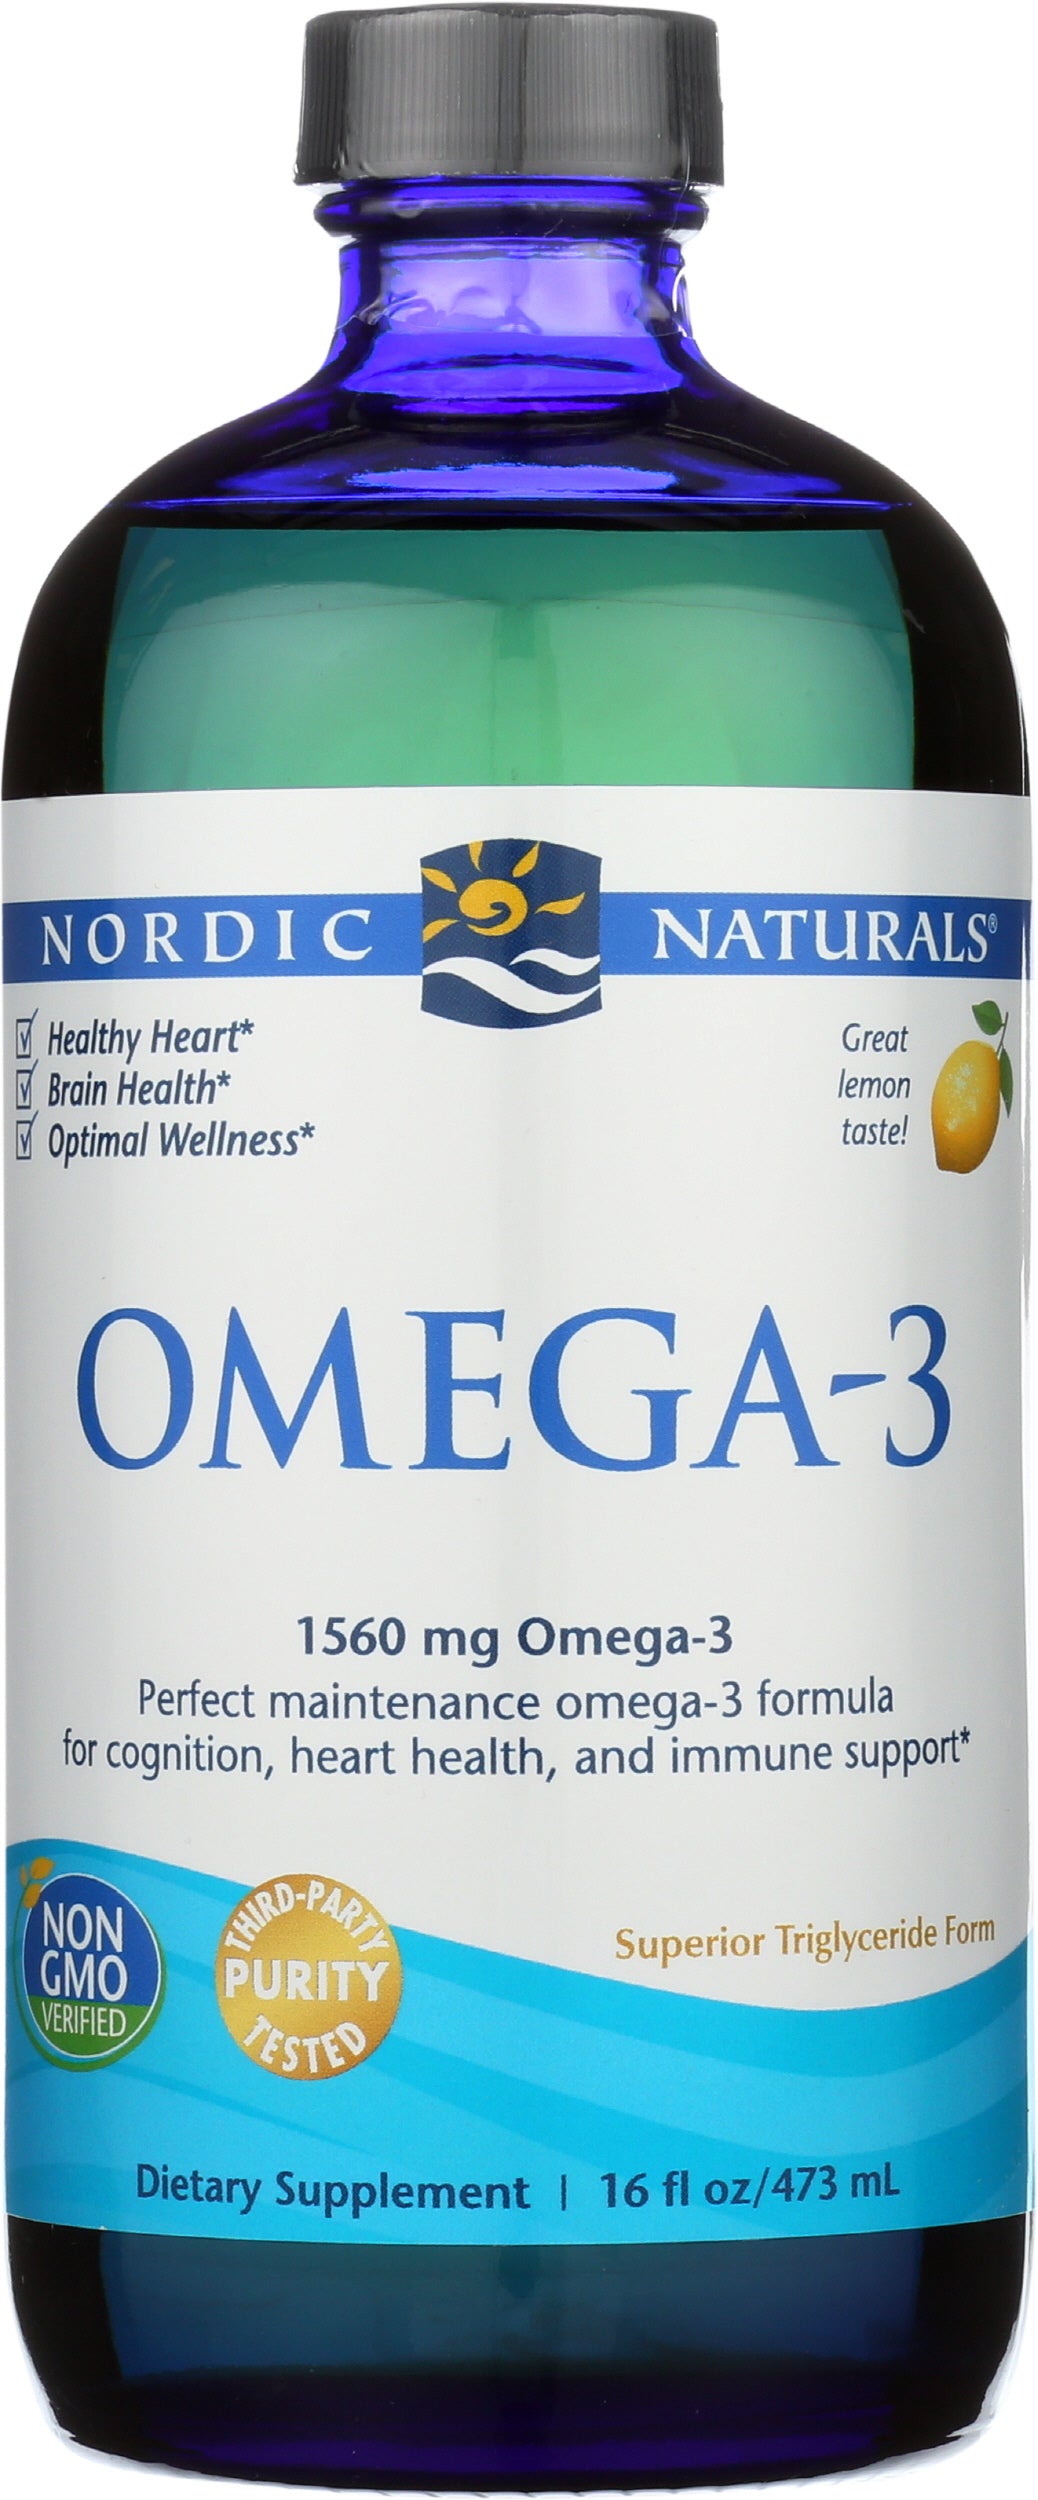 Nordic Naturals Omega-3 1560mg Front of Bottle